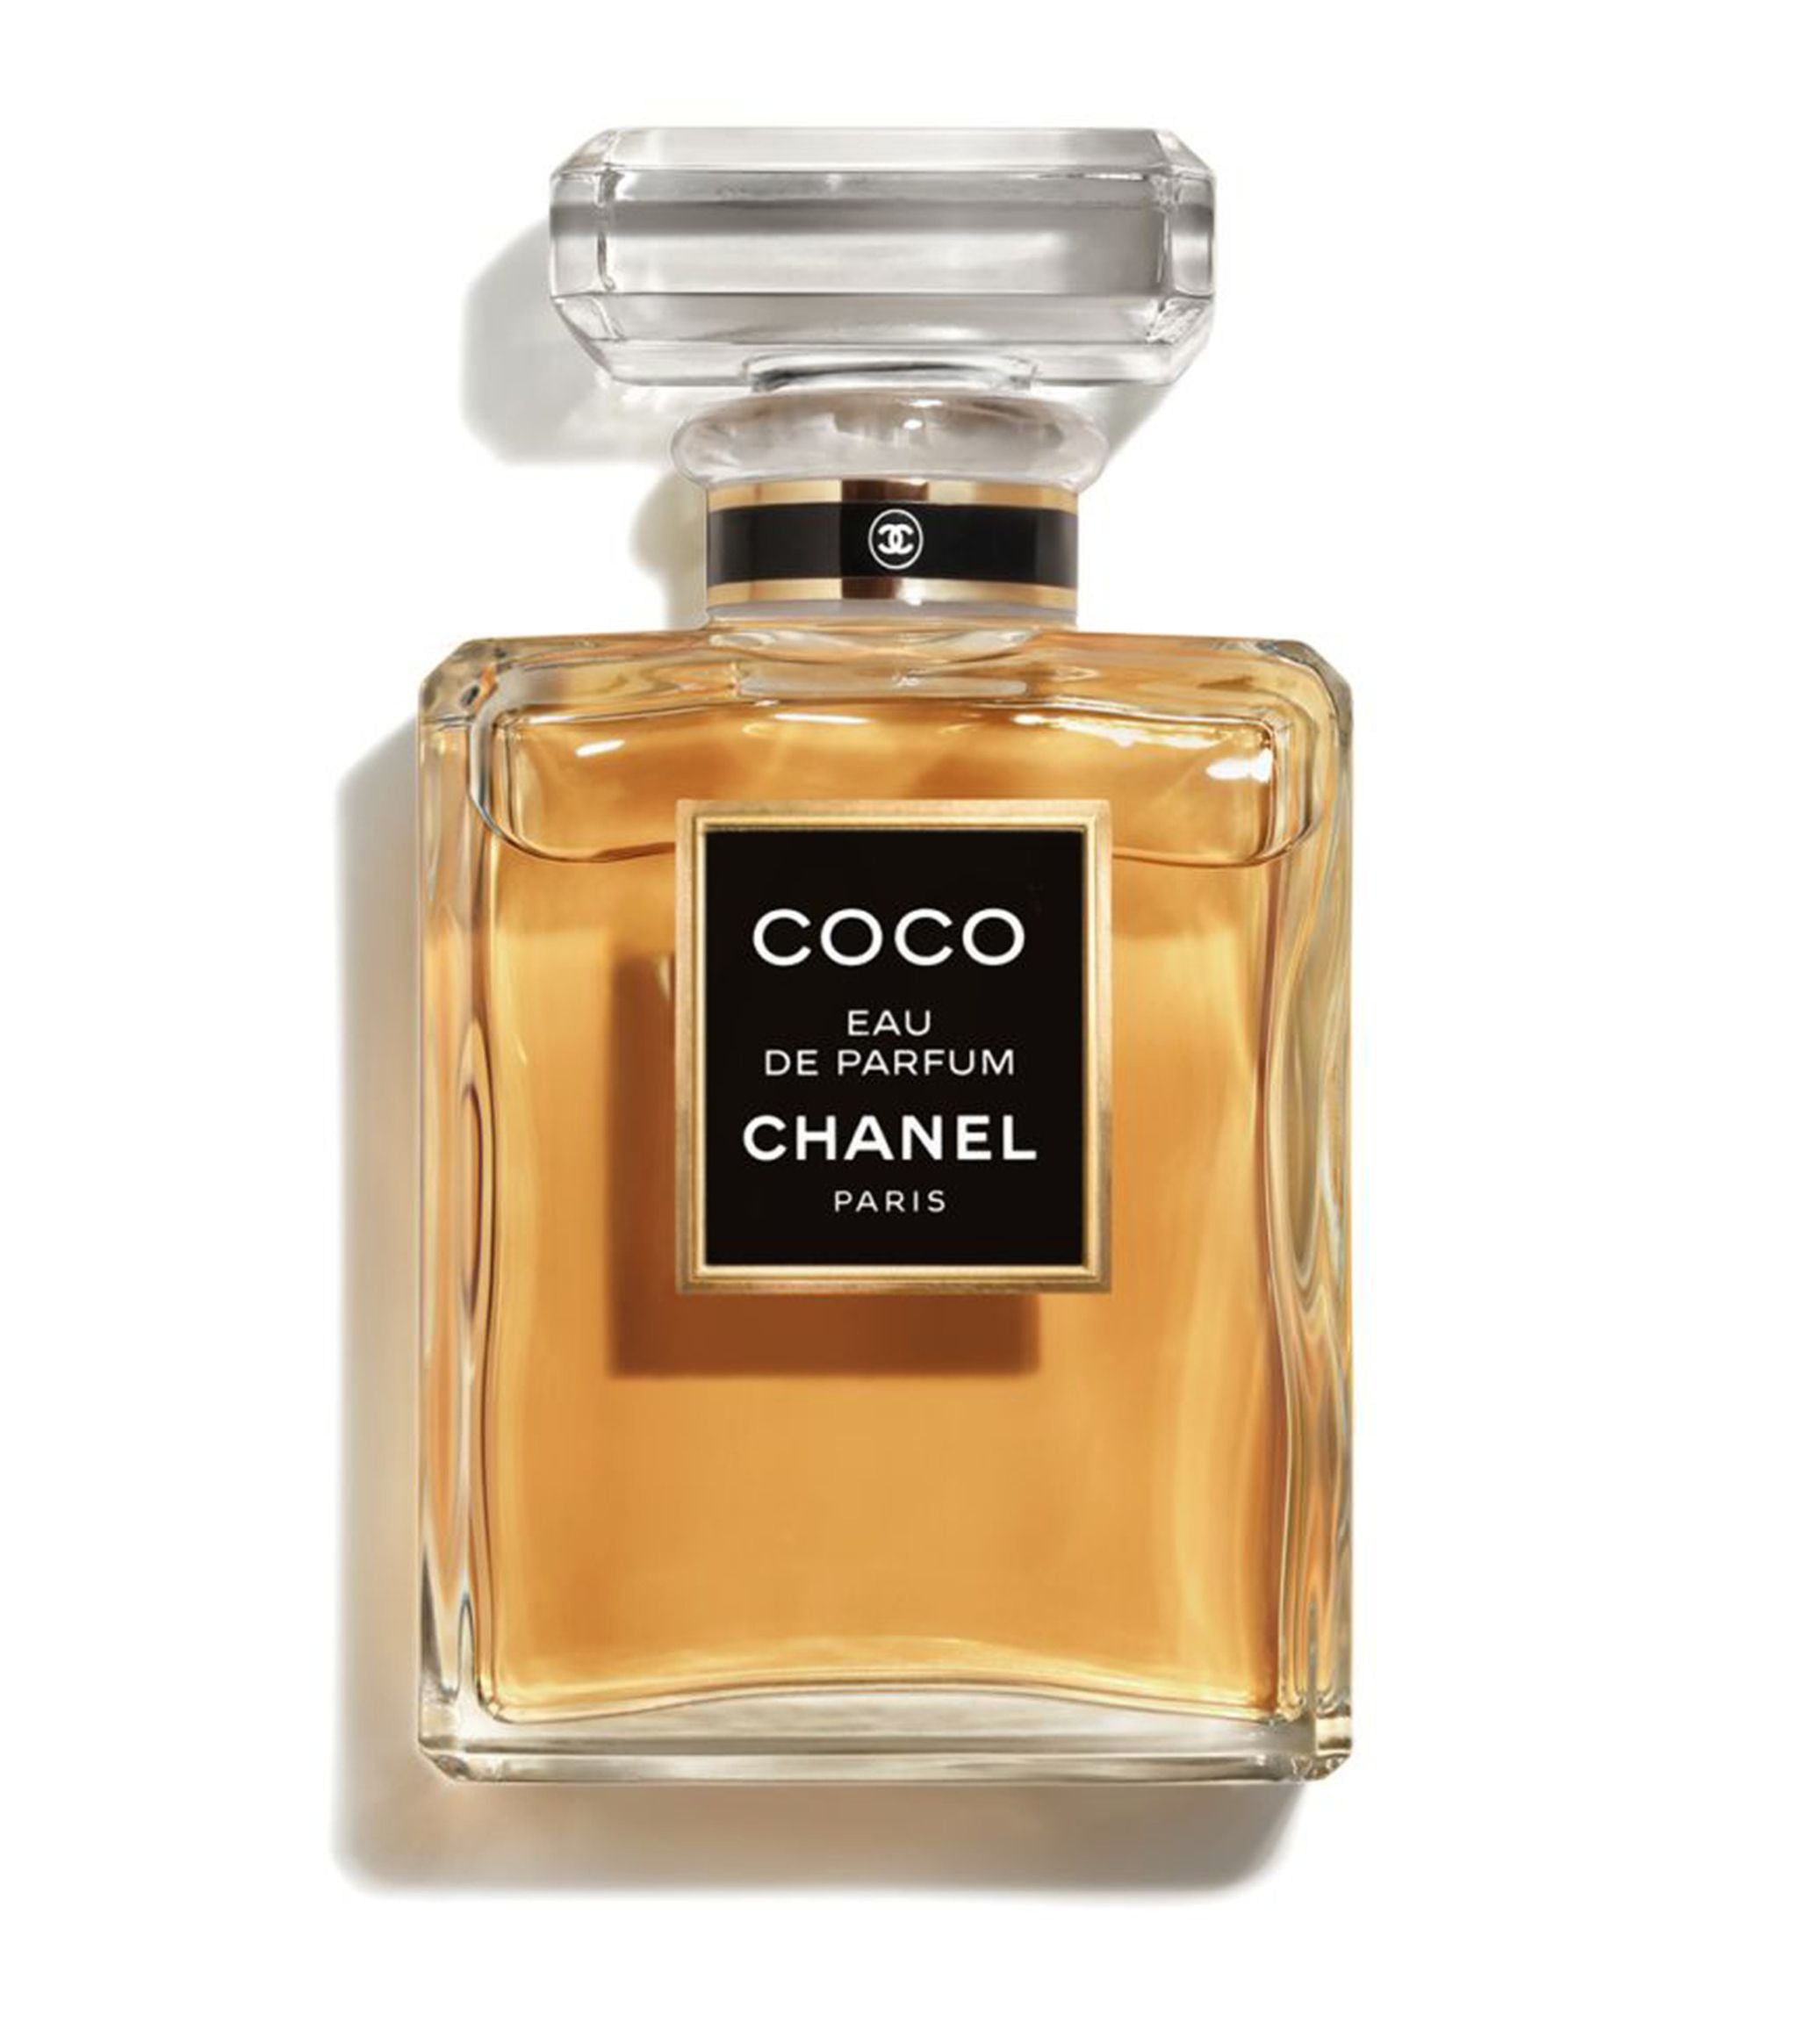 CHANEL COCO Eau de Parfum